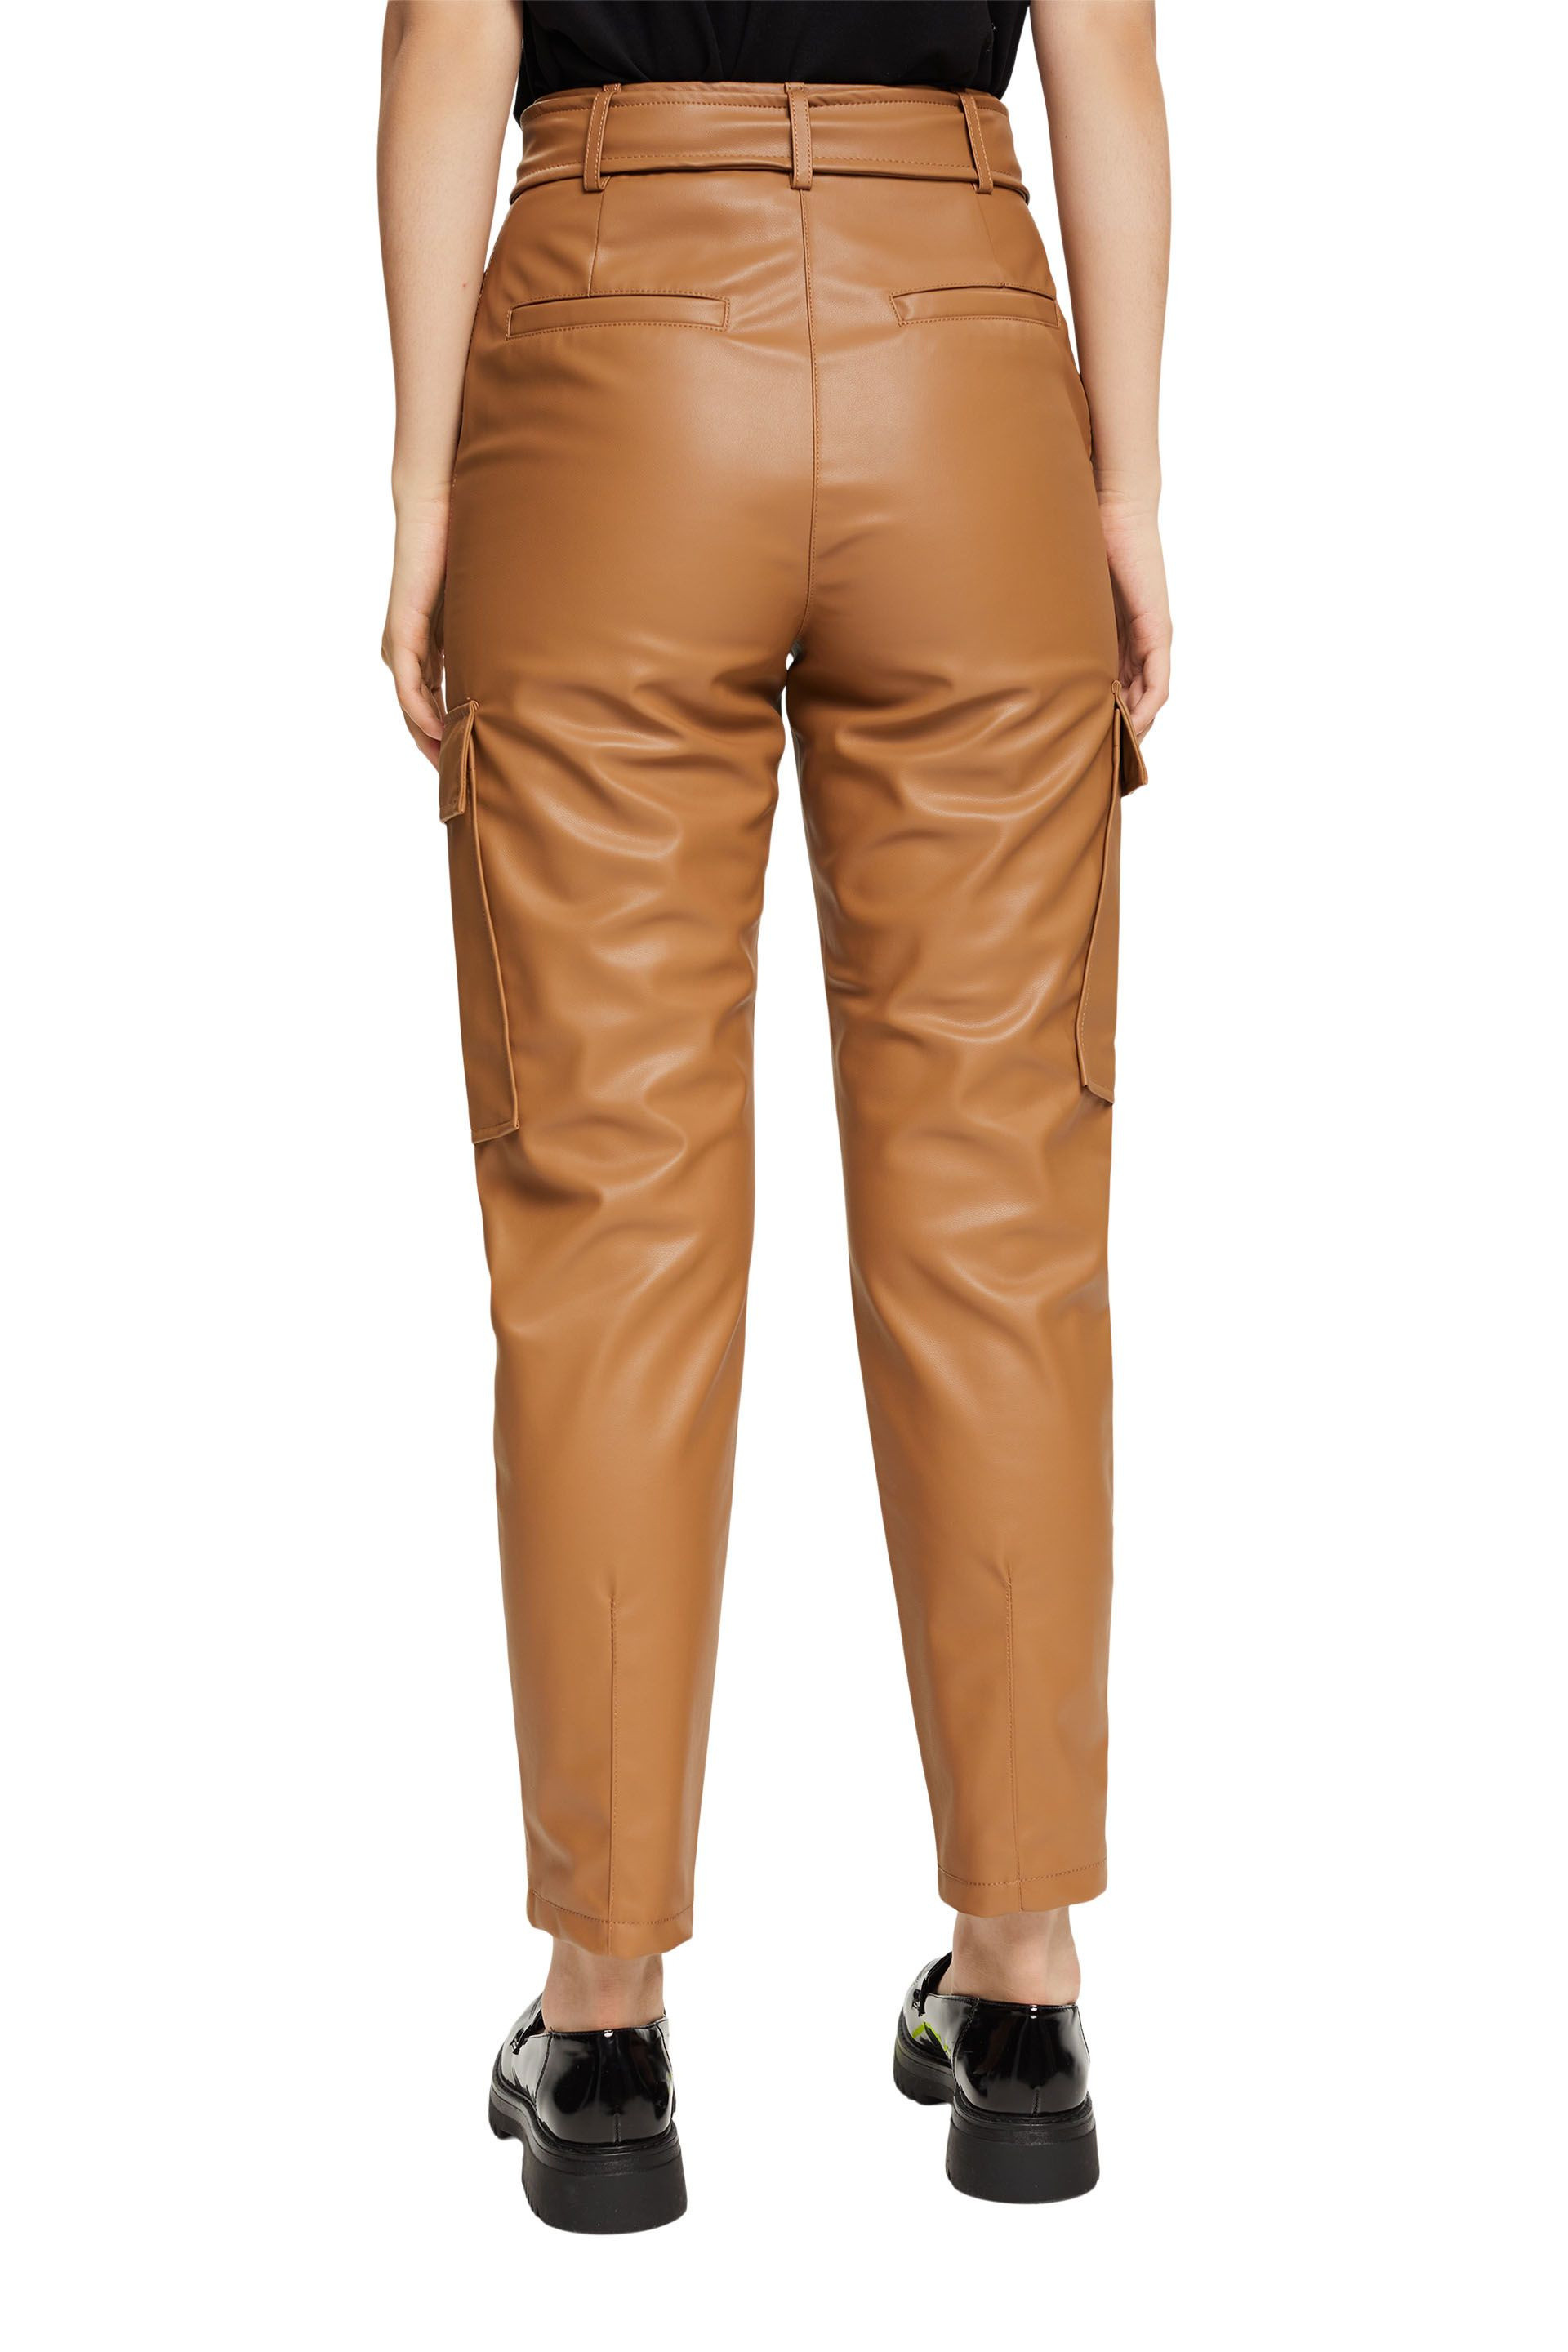 Pantaloni in similpelle con cintura, Marrone chiaro, large image number 2